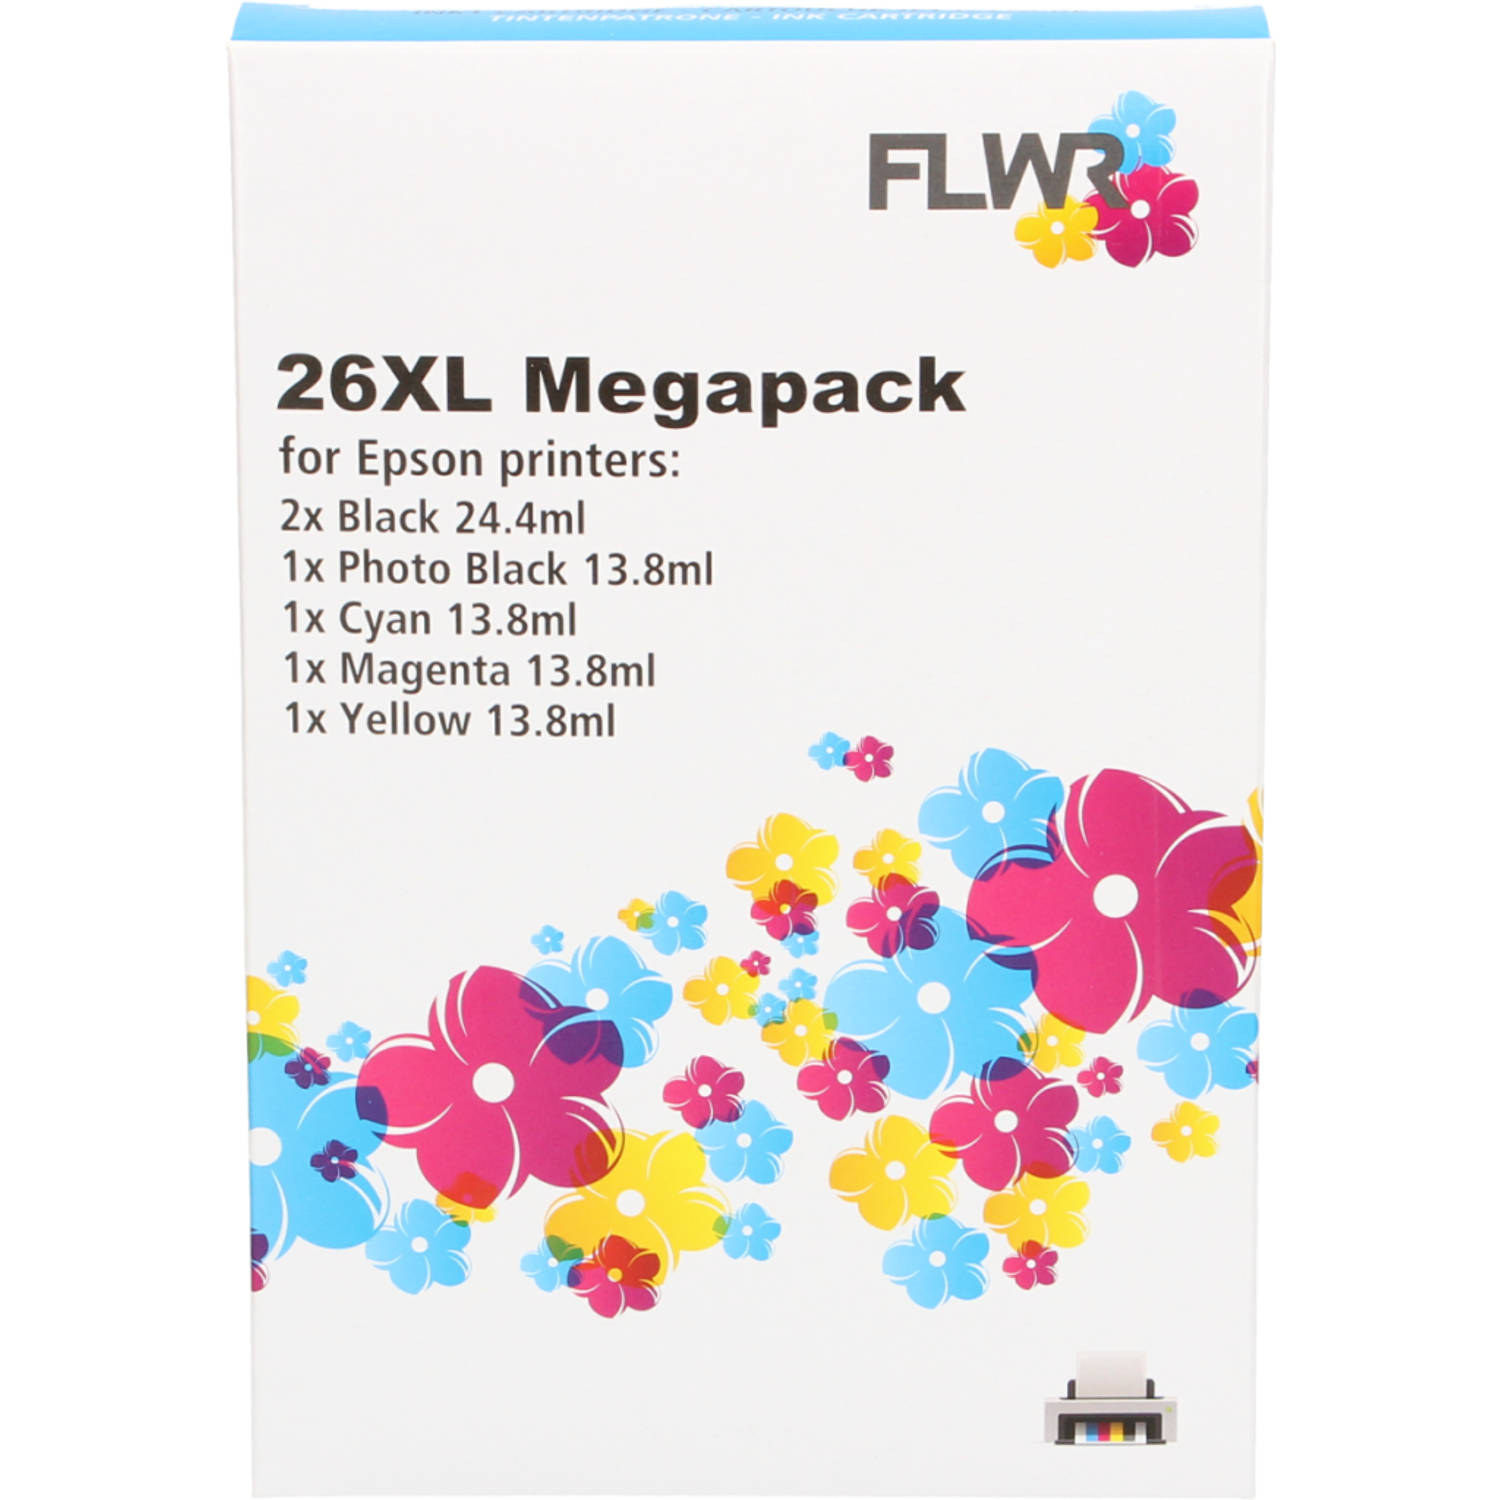 FLWR Epson T2621/2631/2/3/4 Megapack cartridge